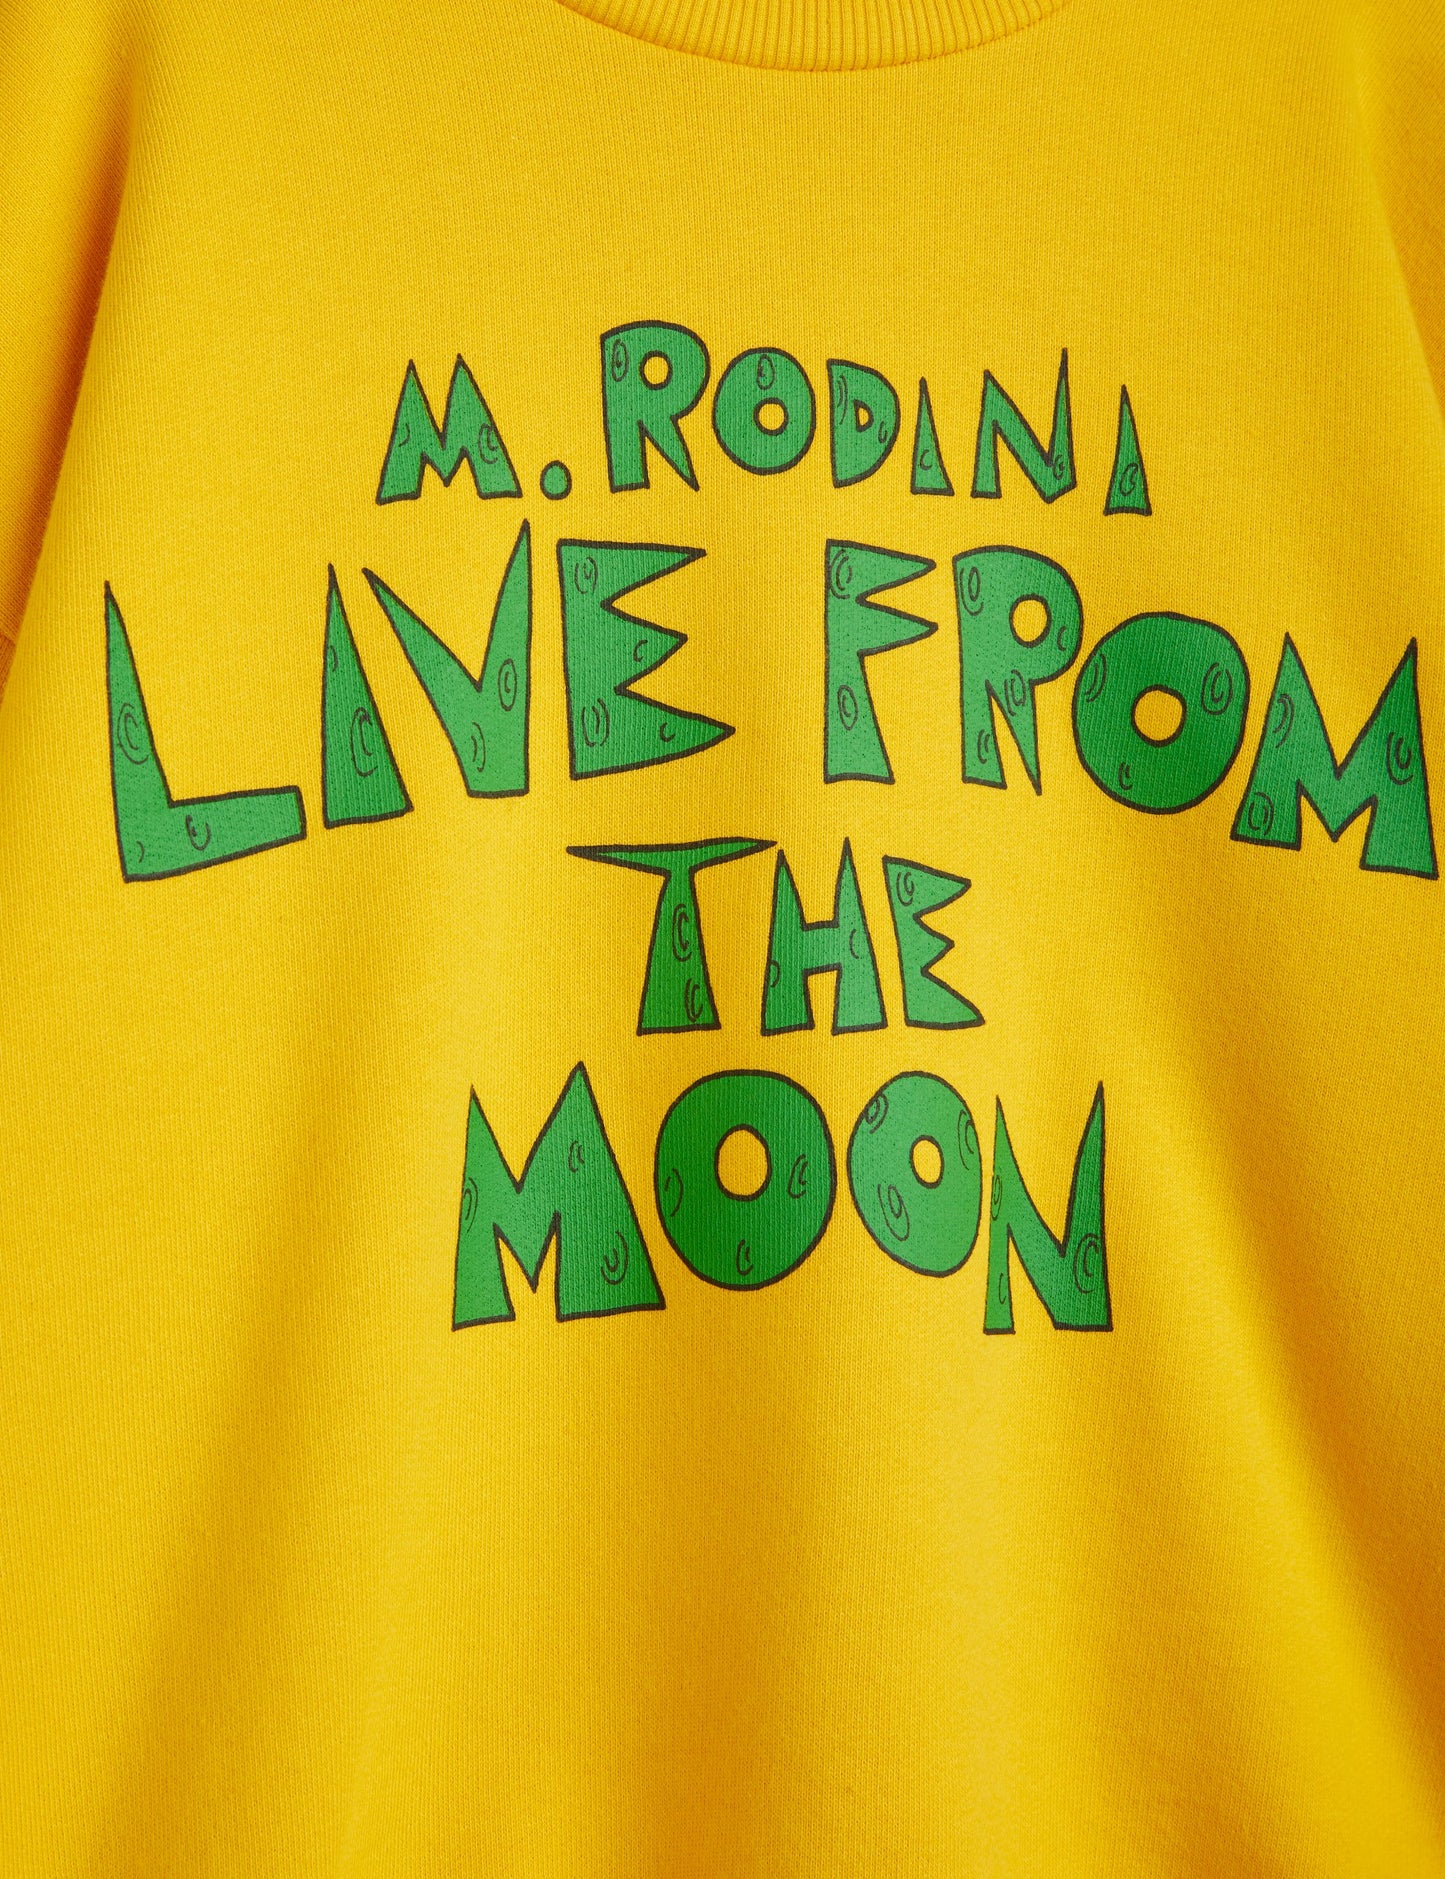 Live From The Moon Sweatshirt Yellow